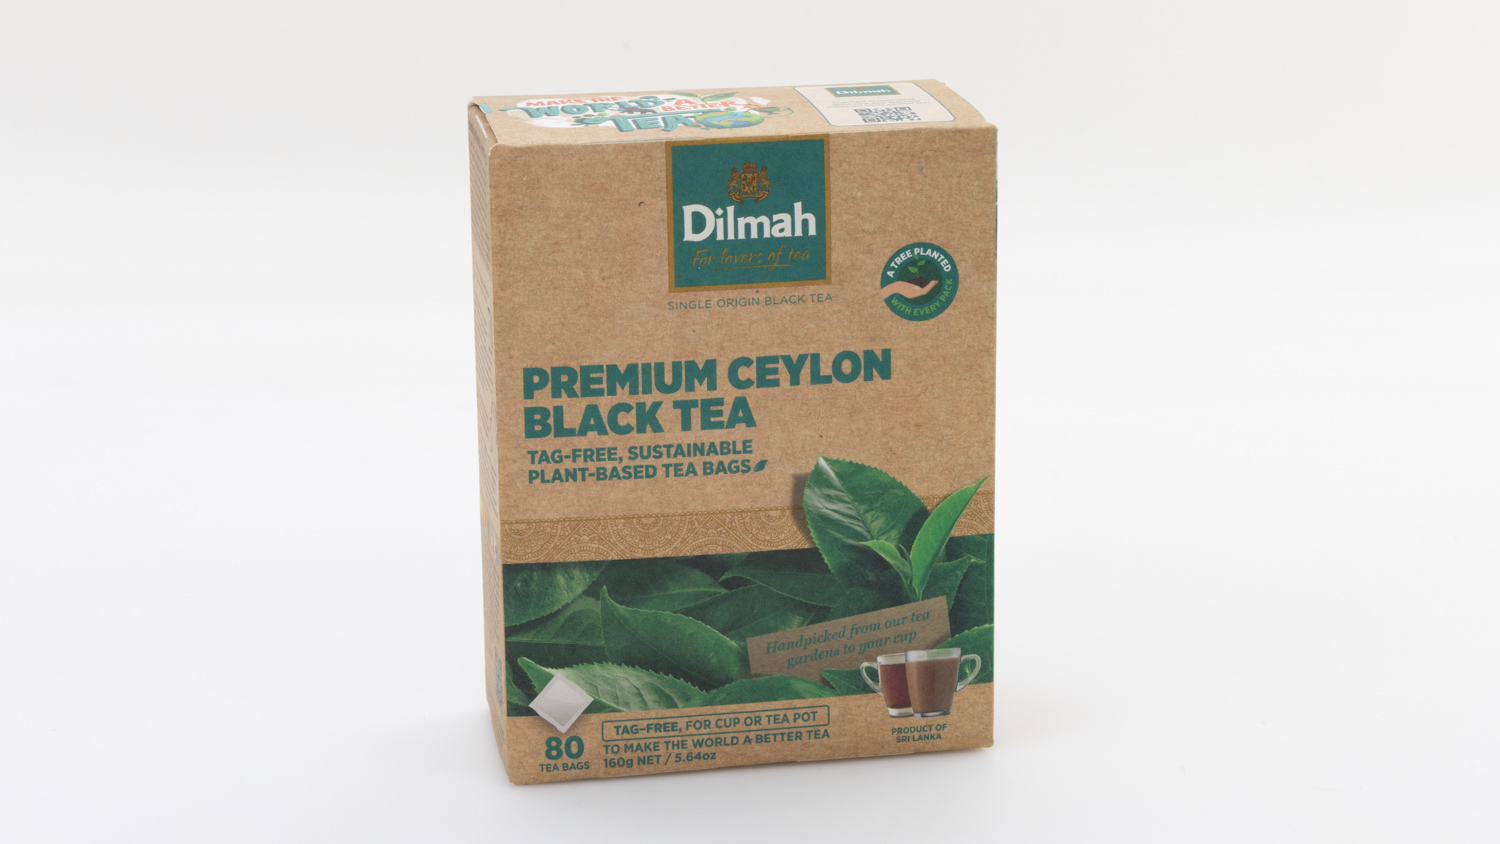 Dilmah Premium Ceylon Black Tea carousel image